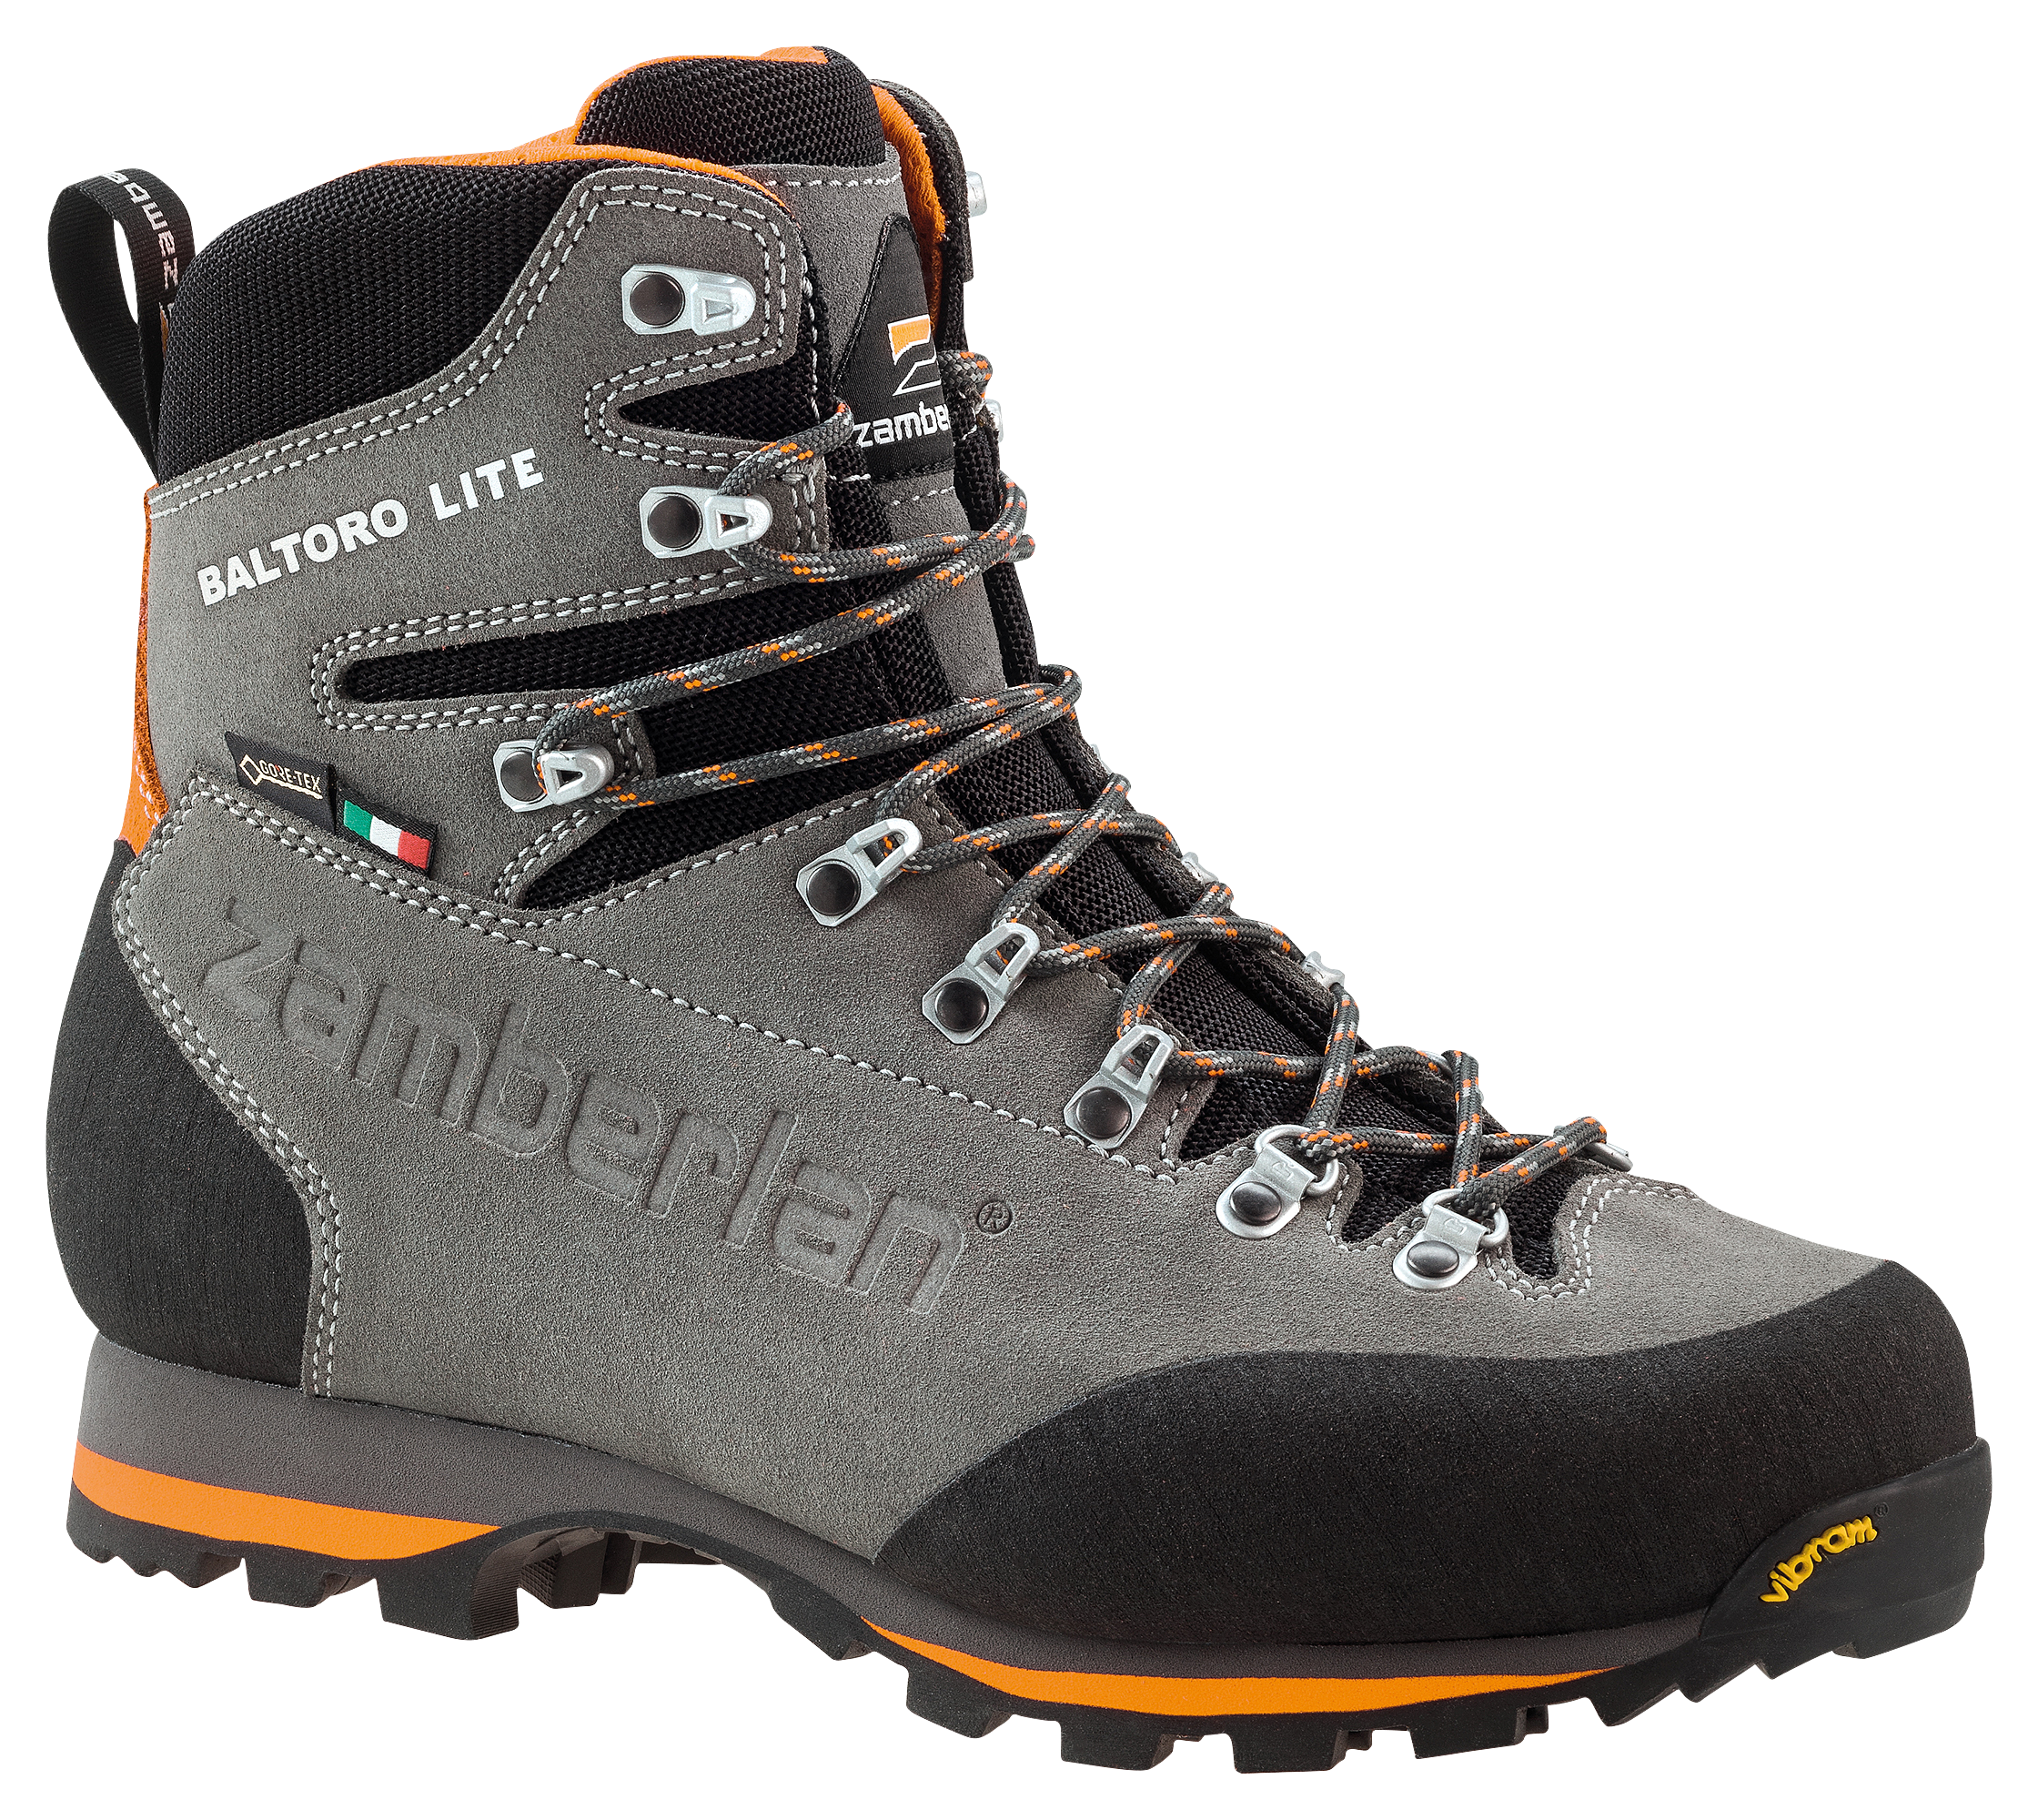 Zamberlan 1110 Baltoro Lite GTX RR Waterproof Hiking Boots for Men